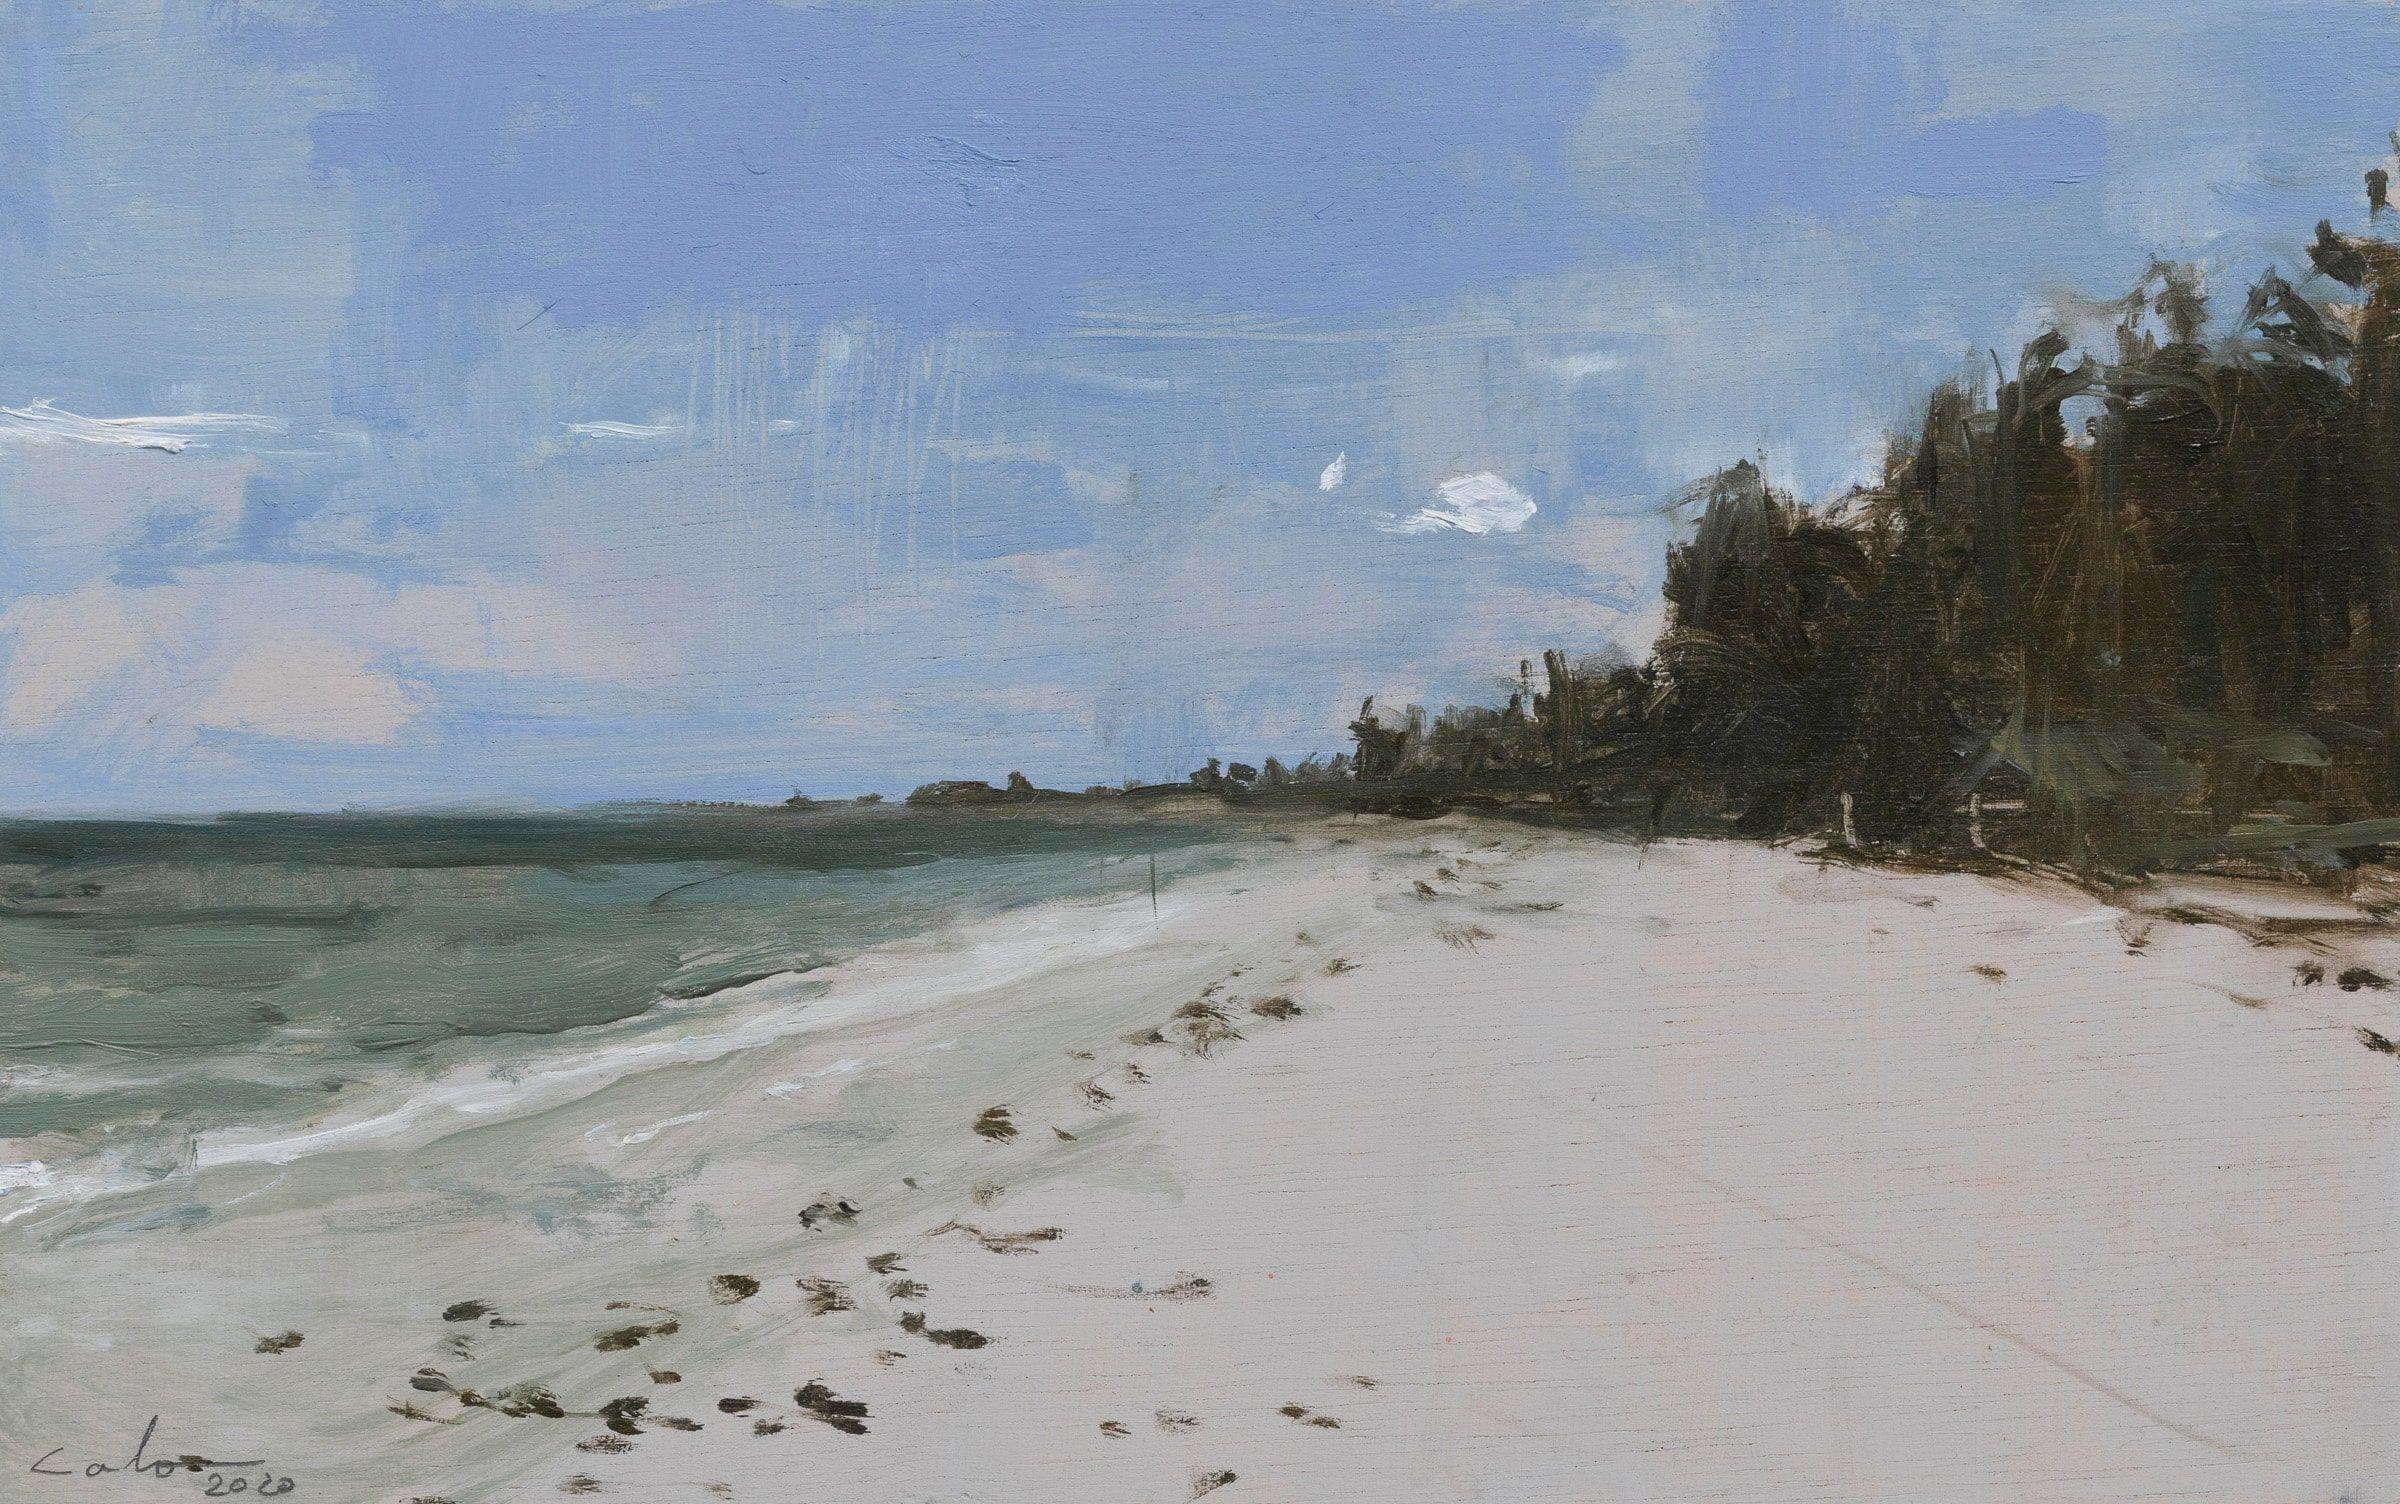 Marinas No. 29 by Calo Carratalá - Landscape Painting, seascape, Tanzania